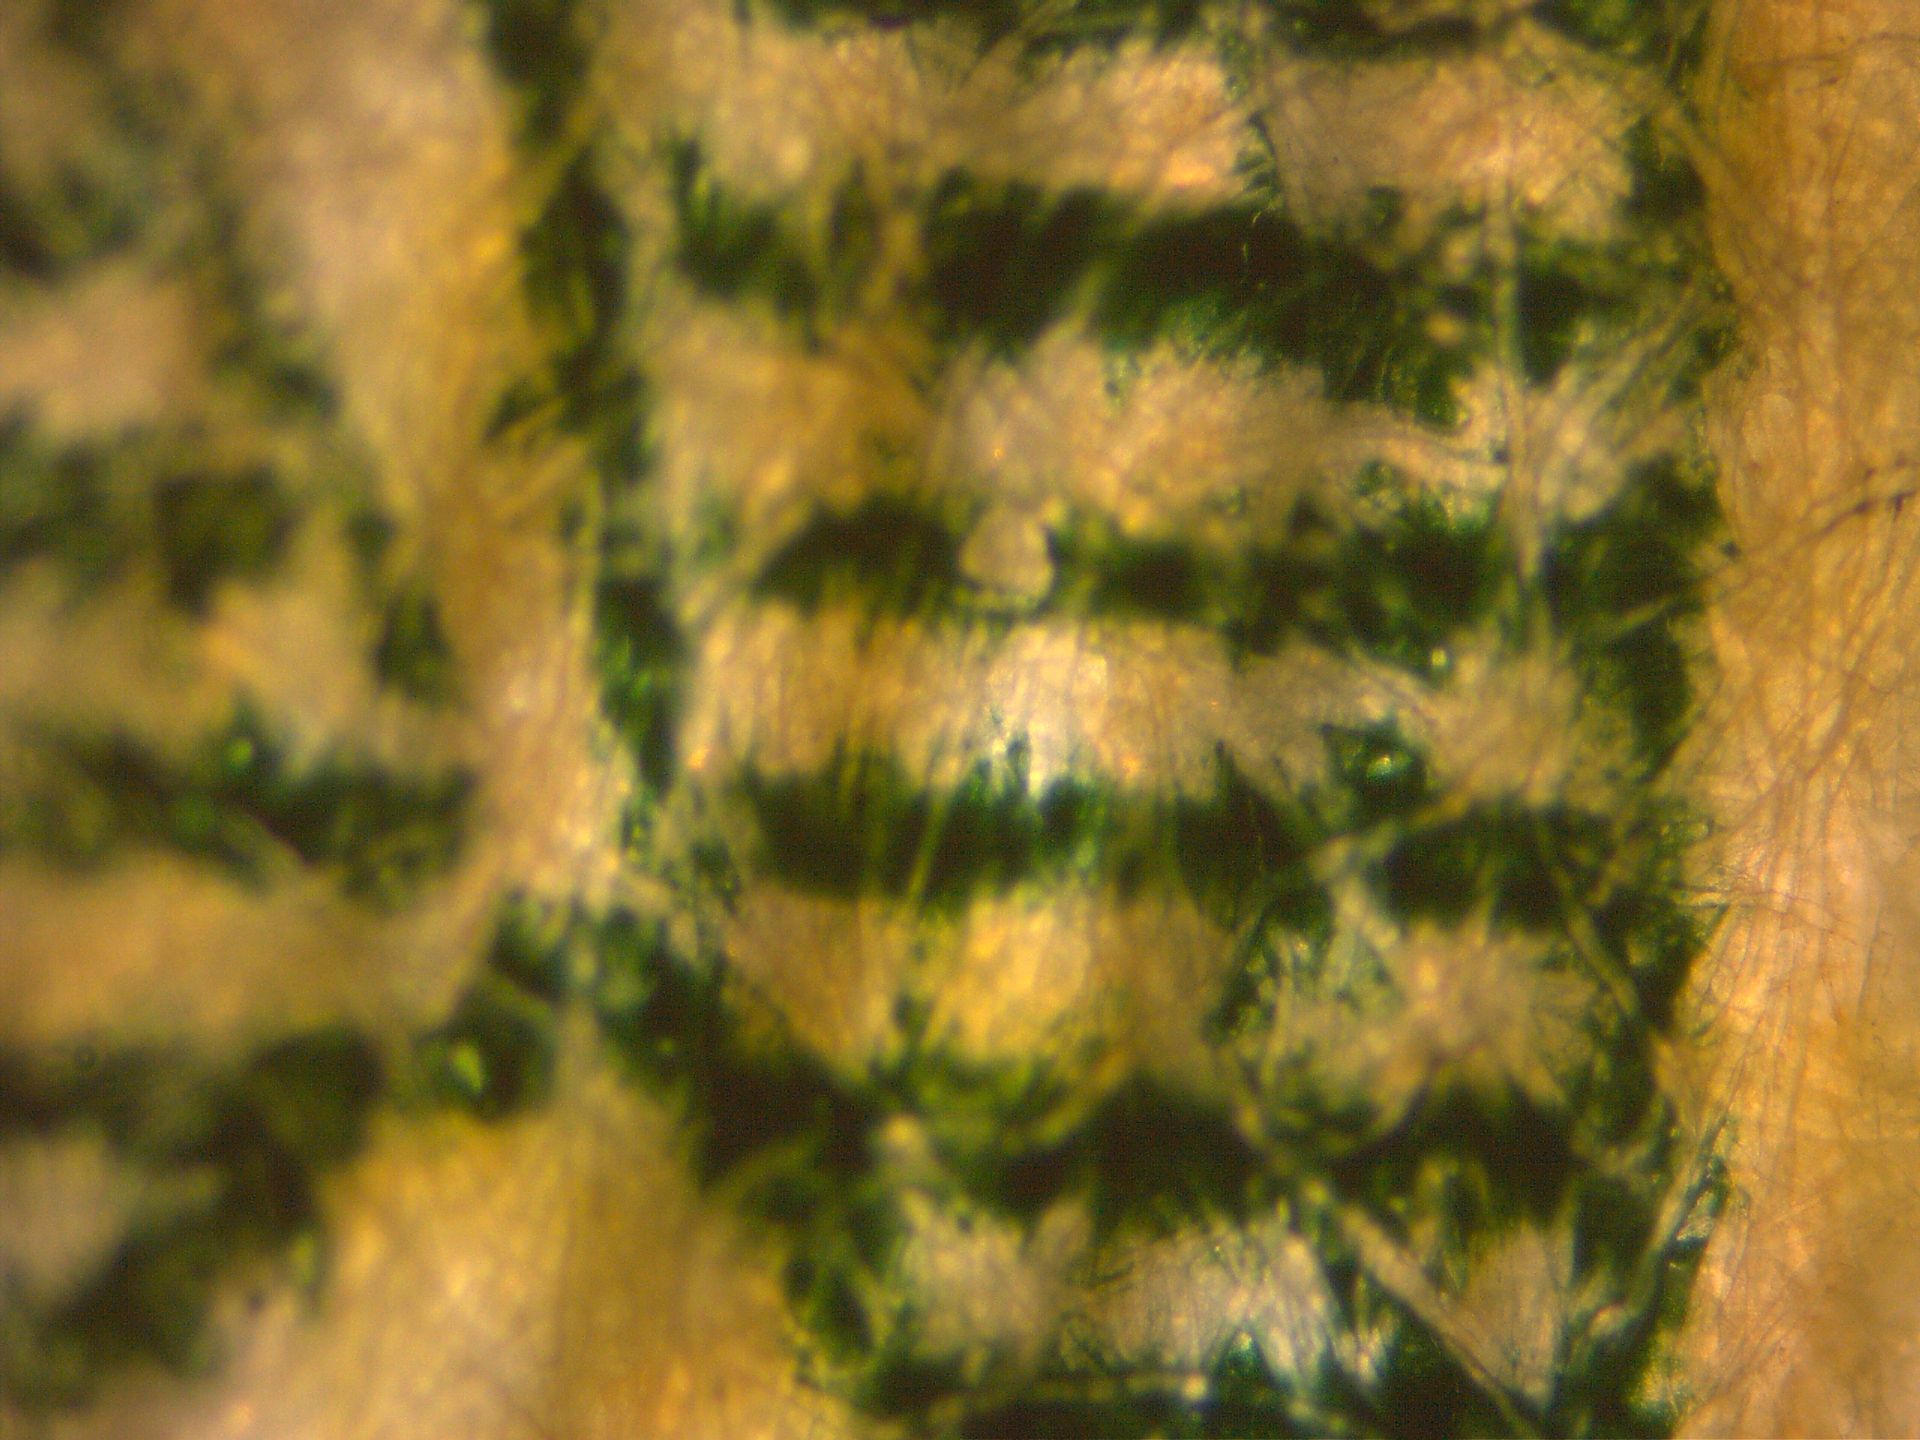 Zeiss Primovert HDcam Microscope, 4X, 10X, 20X, 40X PH Objectives, 0.4 LD Conden, Microscope - Image 20 of 20